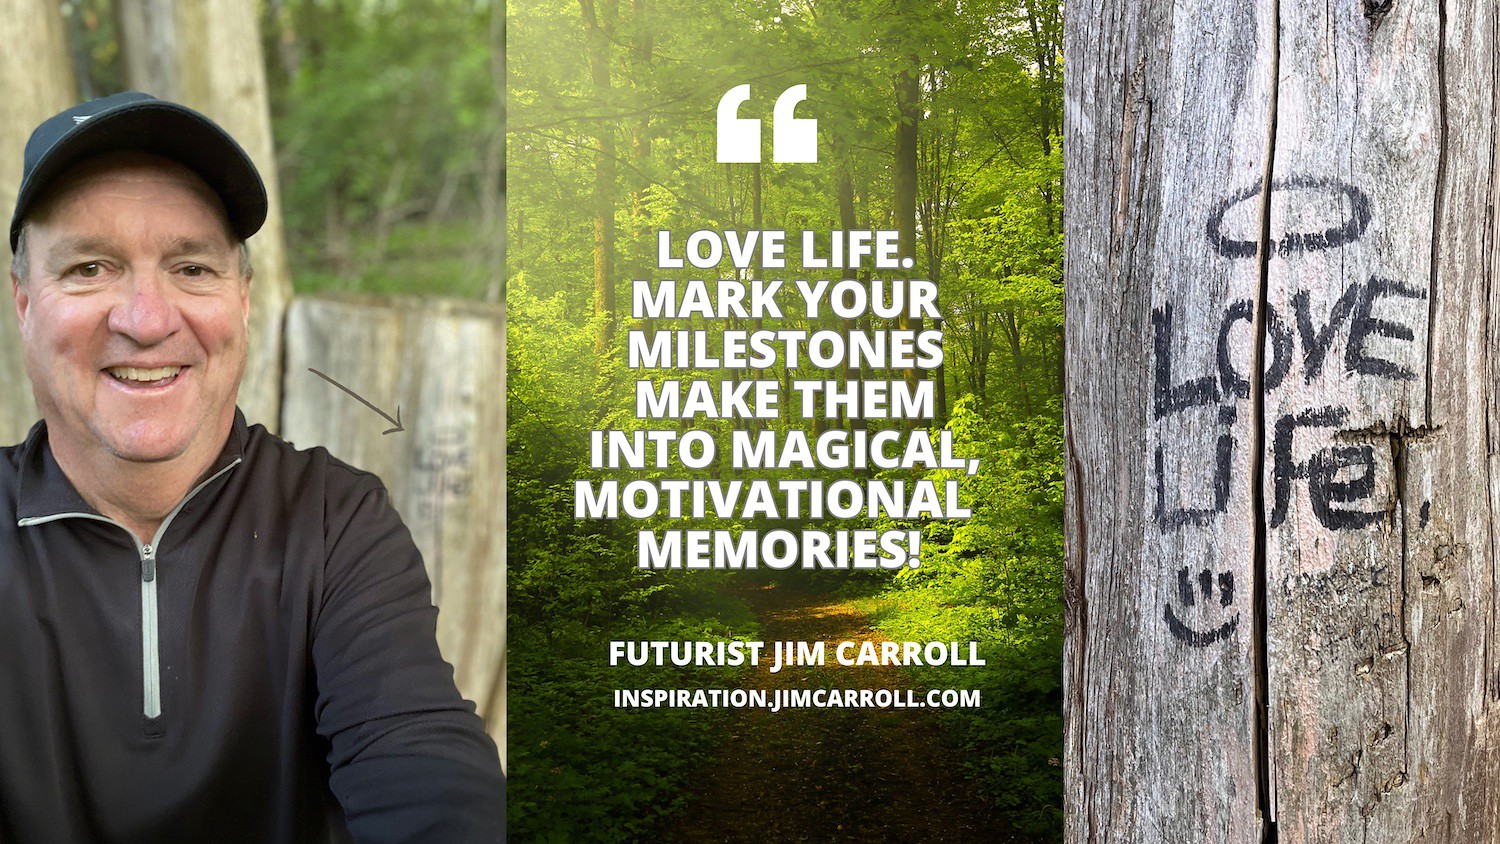 "Love life. Mark your milestones. Make them into magical, motivational memories!" - Futurist Jim Carroll